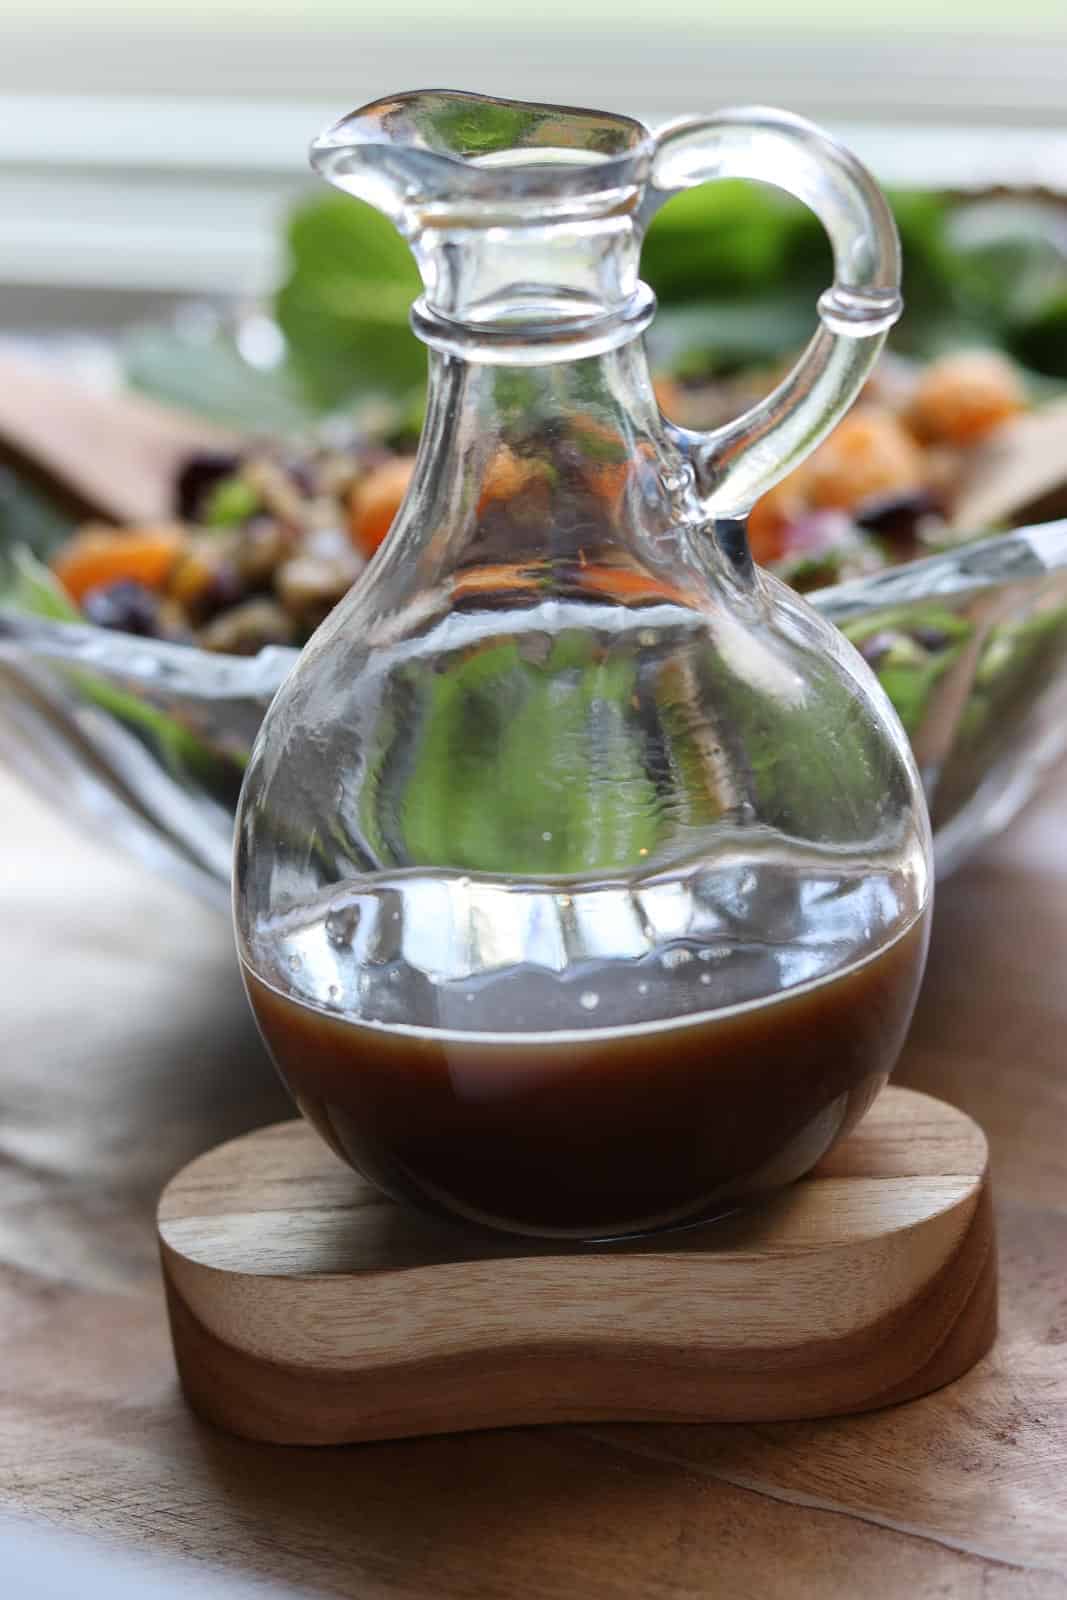 Mandarin Wild Rice Salad with Orange Vinaigrette Dressing in a glass cruet from Gourmet Done Skinny